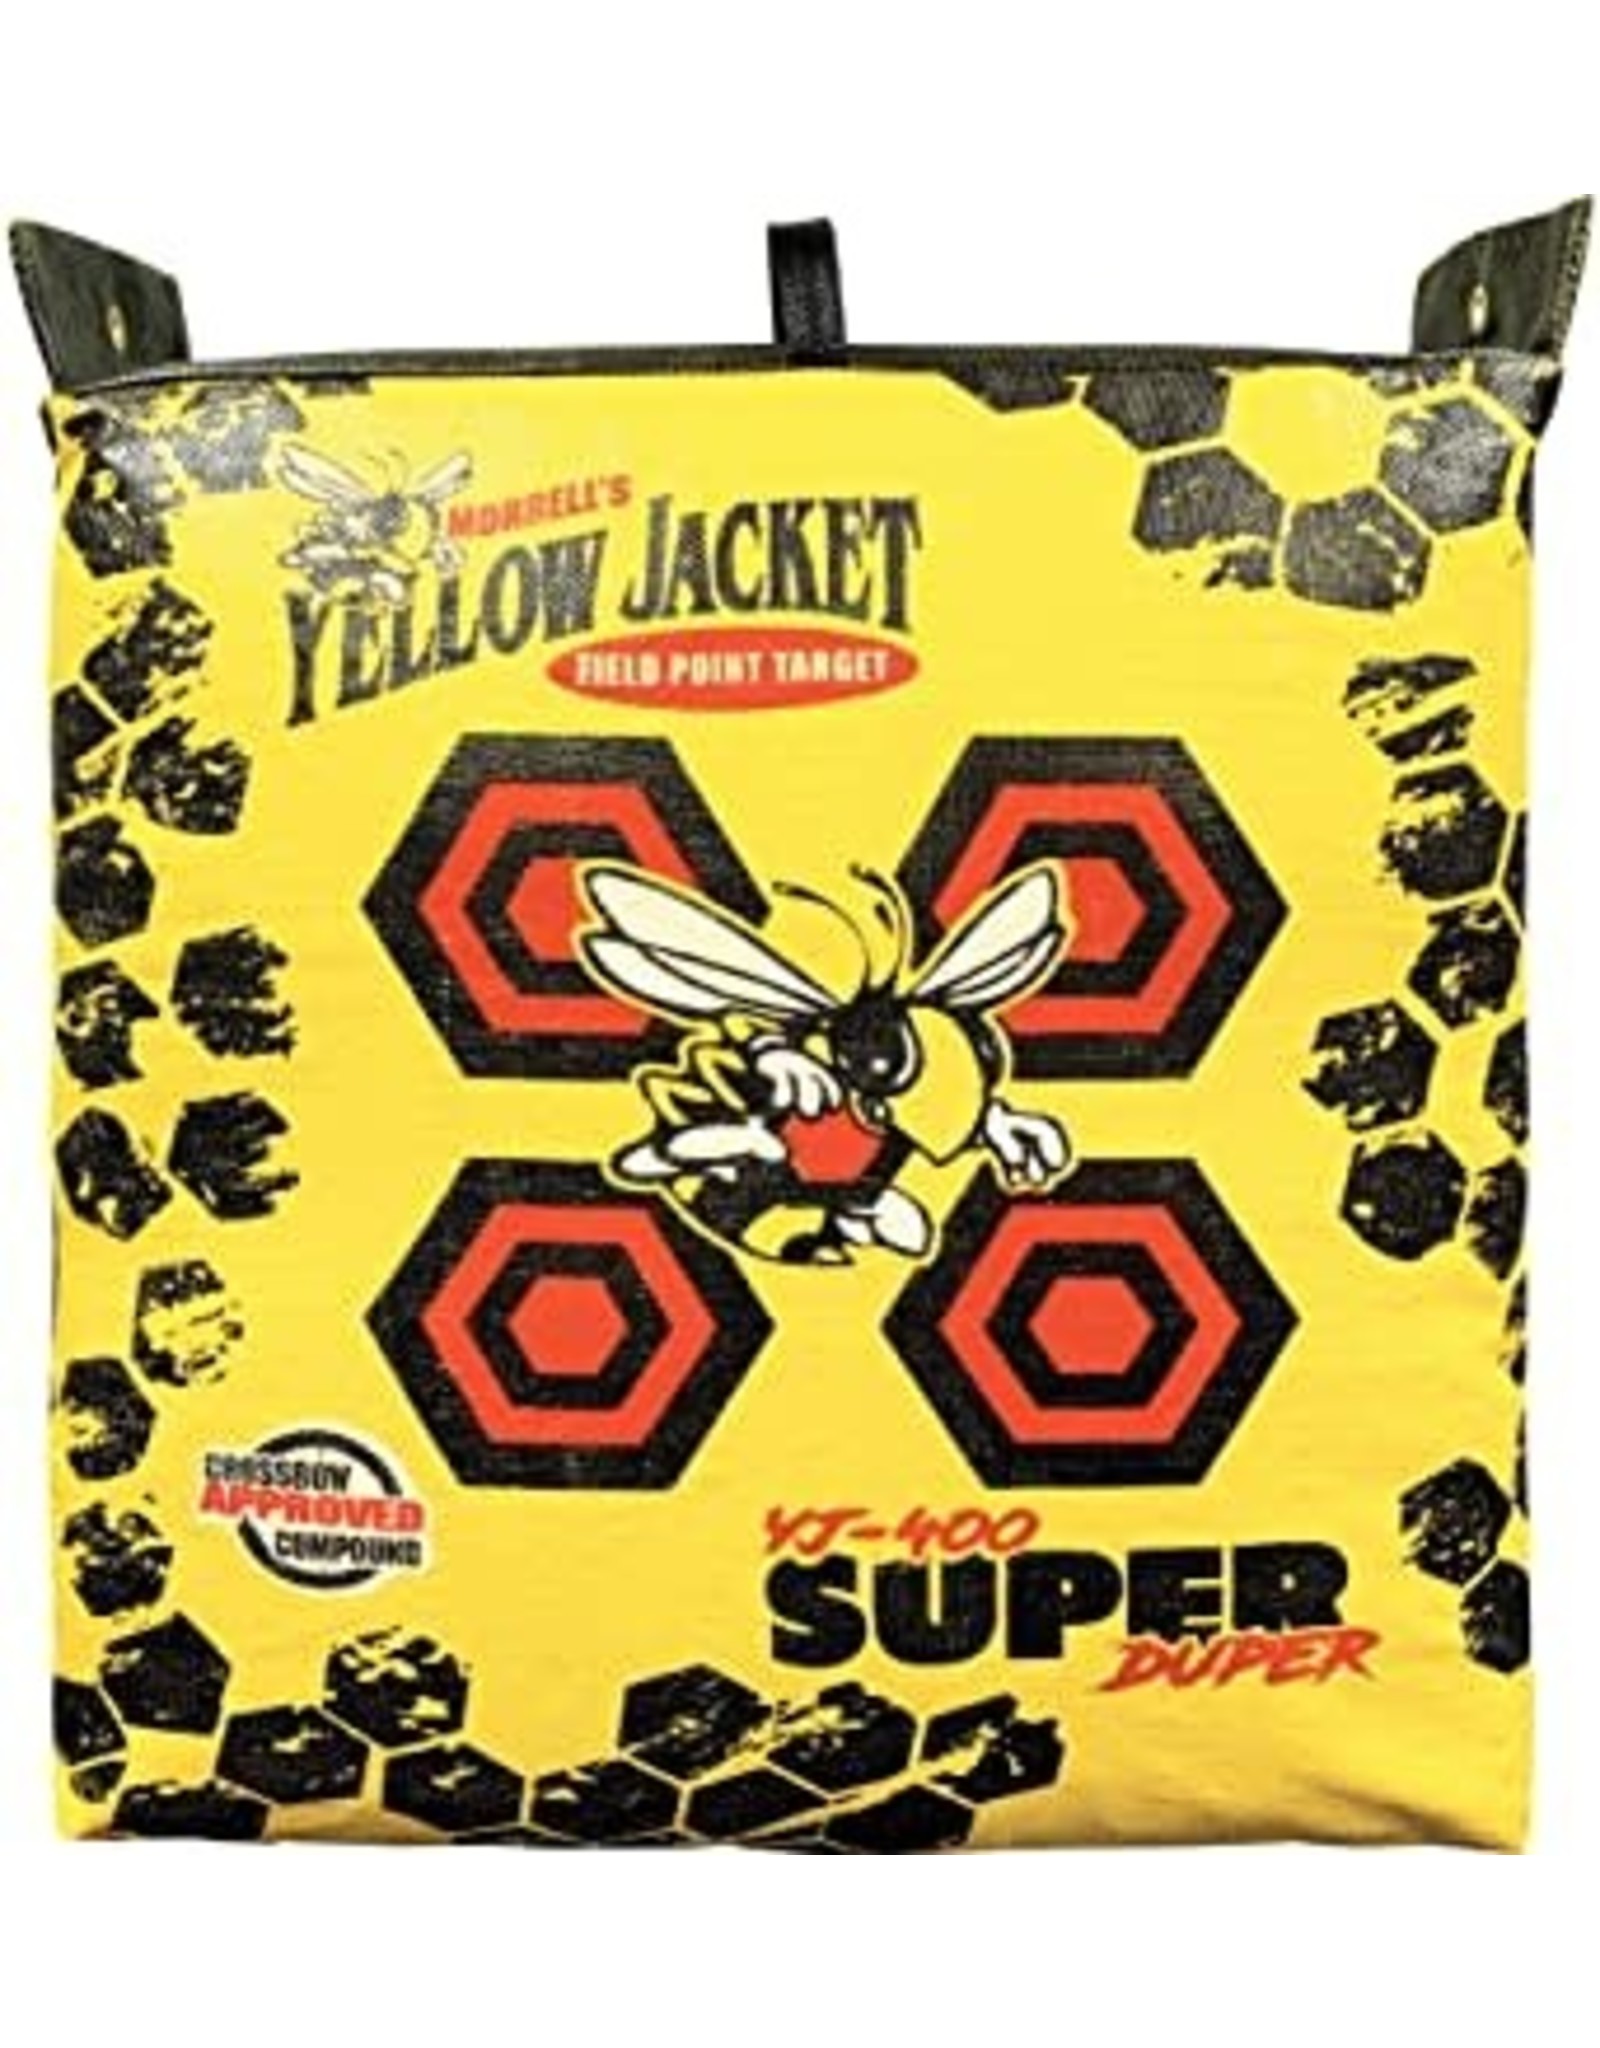 MORRELL MFG INC YJ-400 Yellow Jacket Super Duper Target #173 400 fps